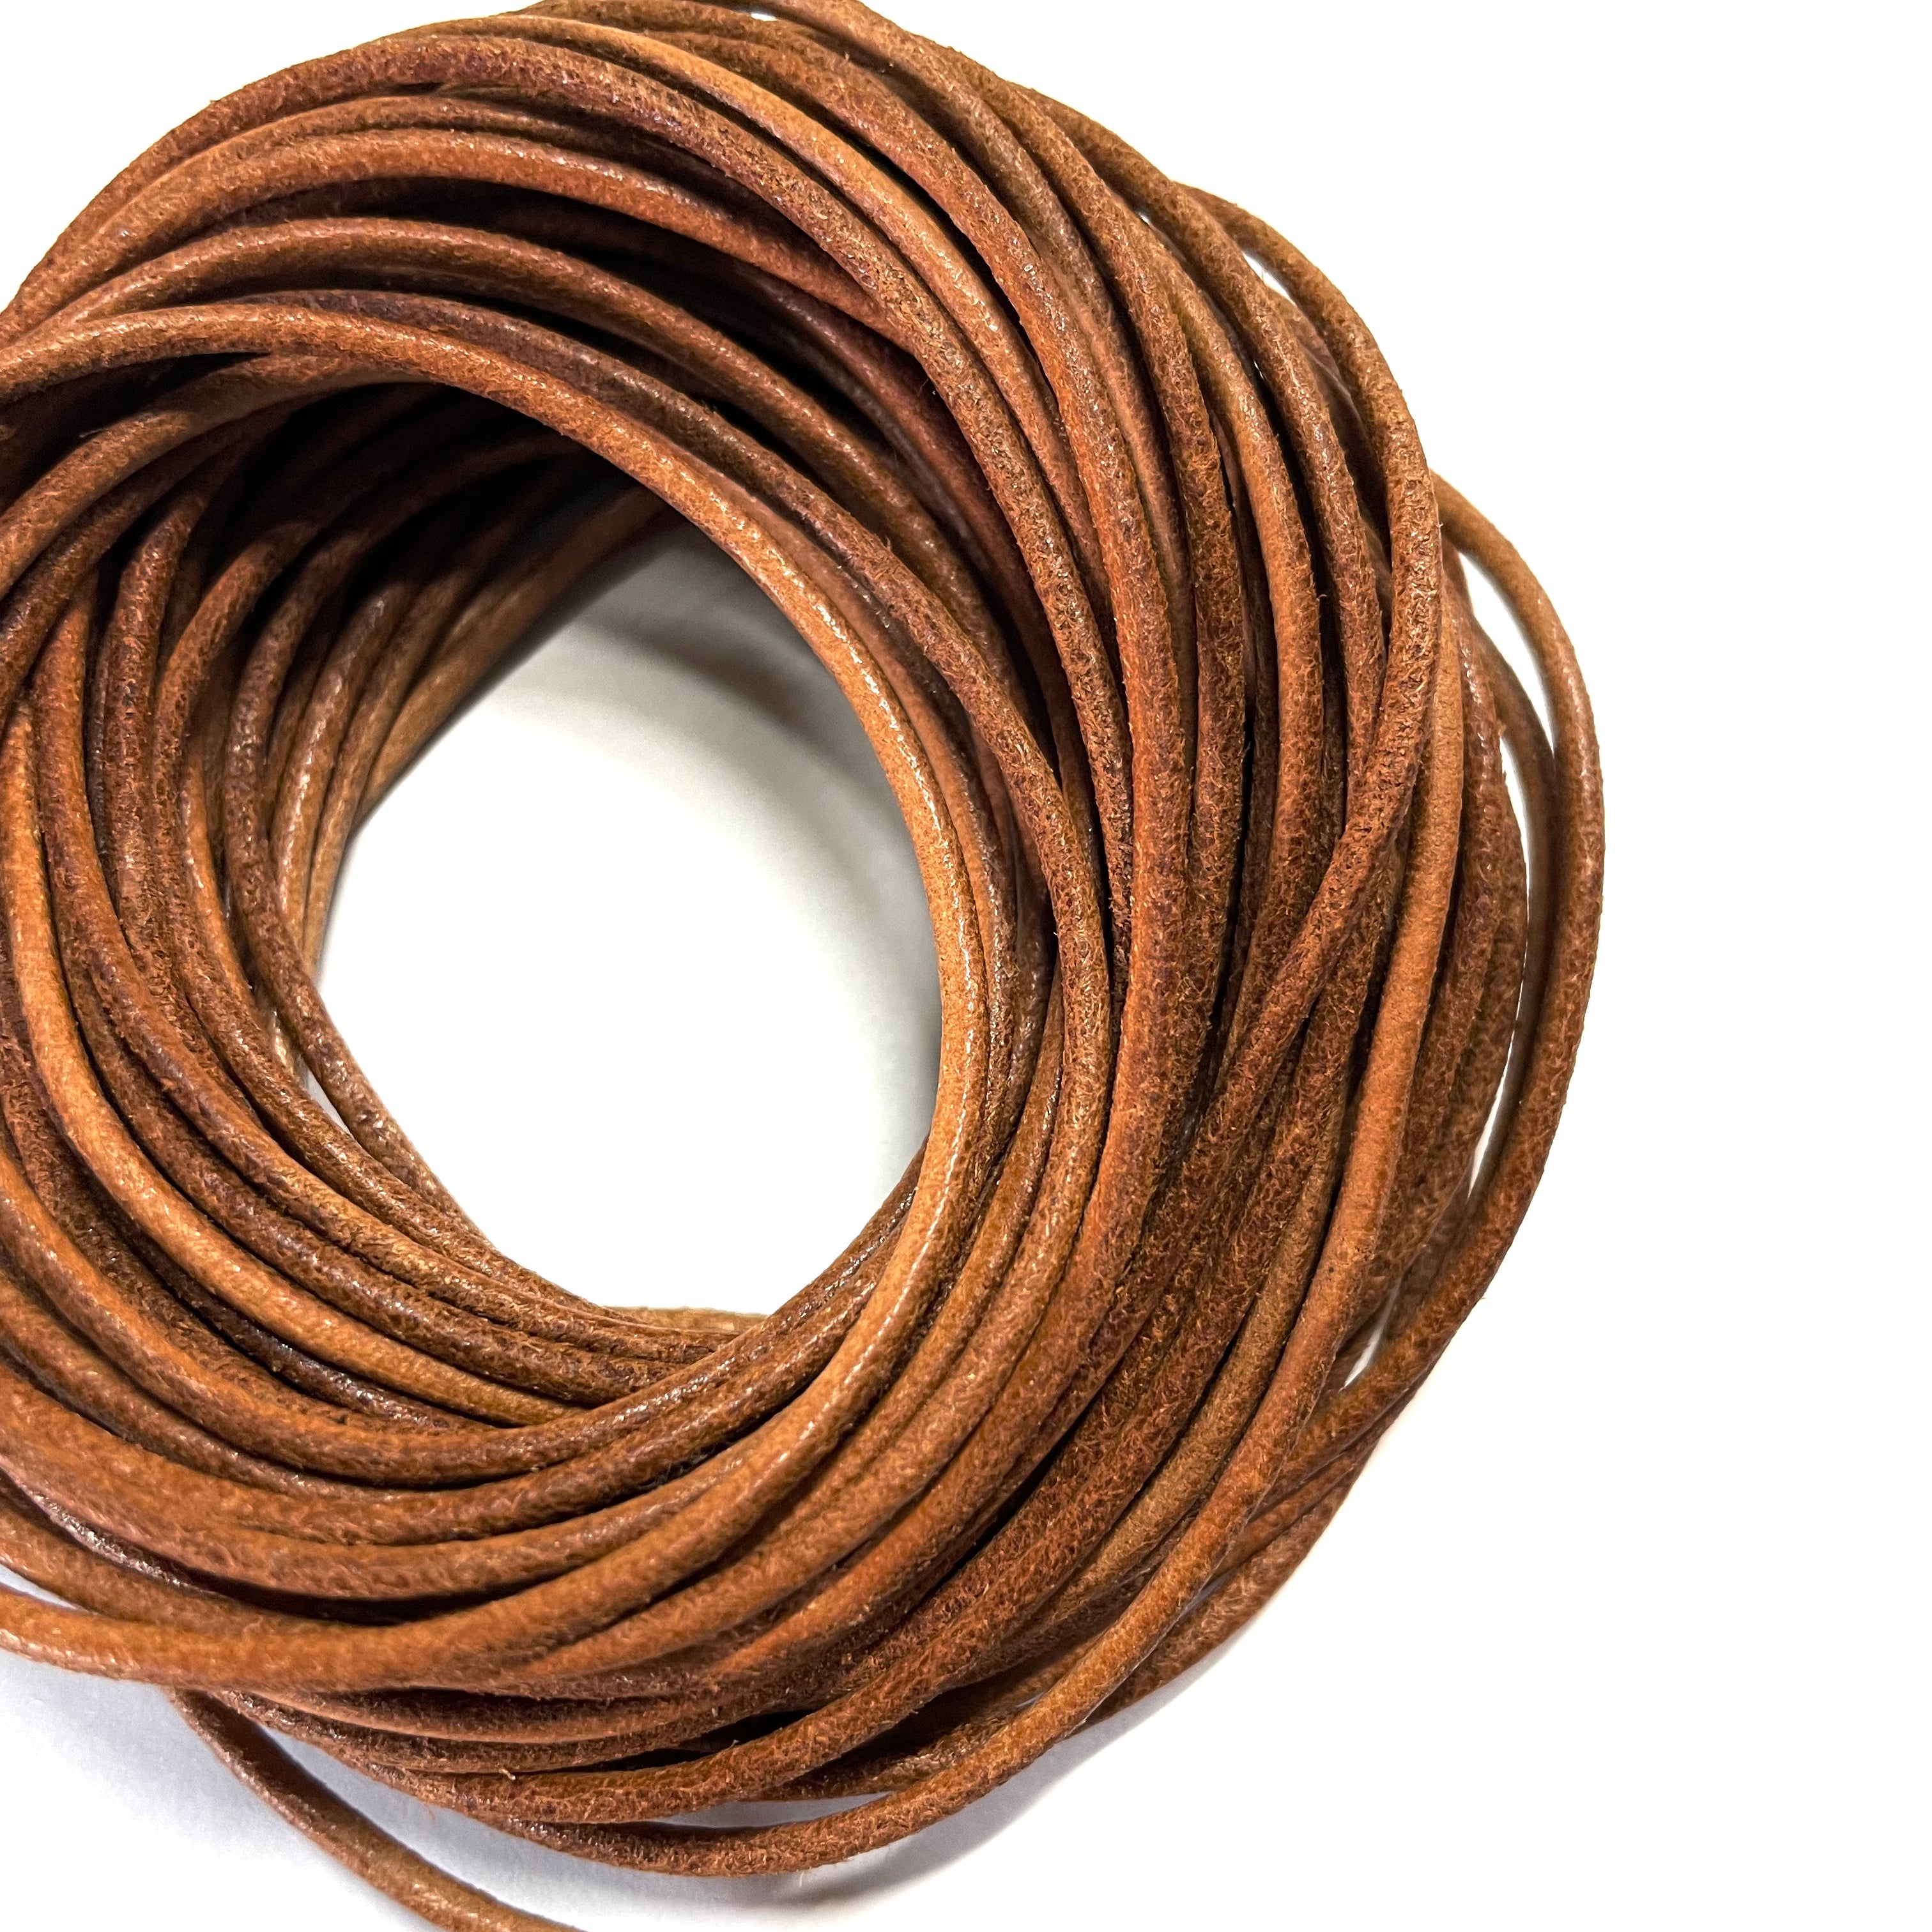 Natural Genuine Leather Cord per 10mtrs - Natural Tan Brown 2mm